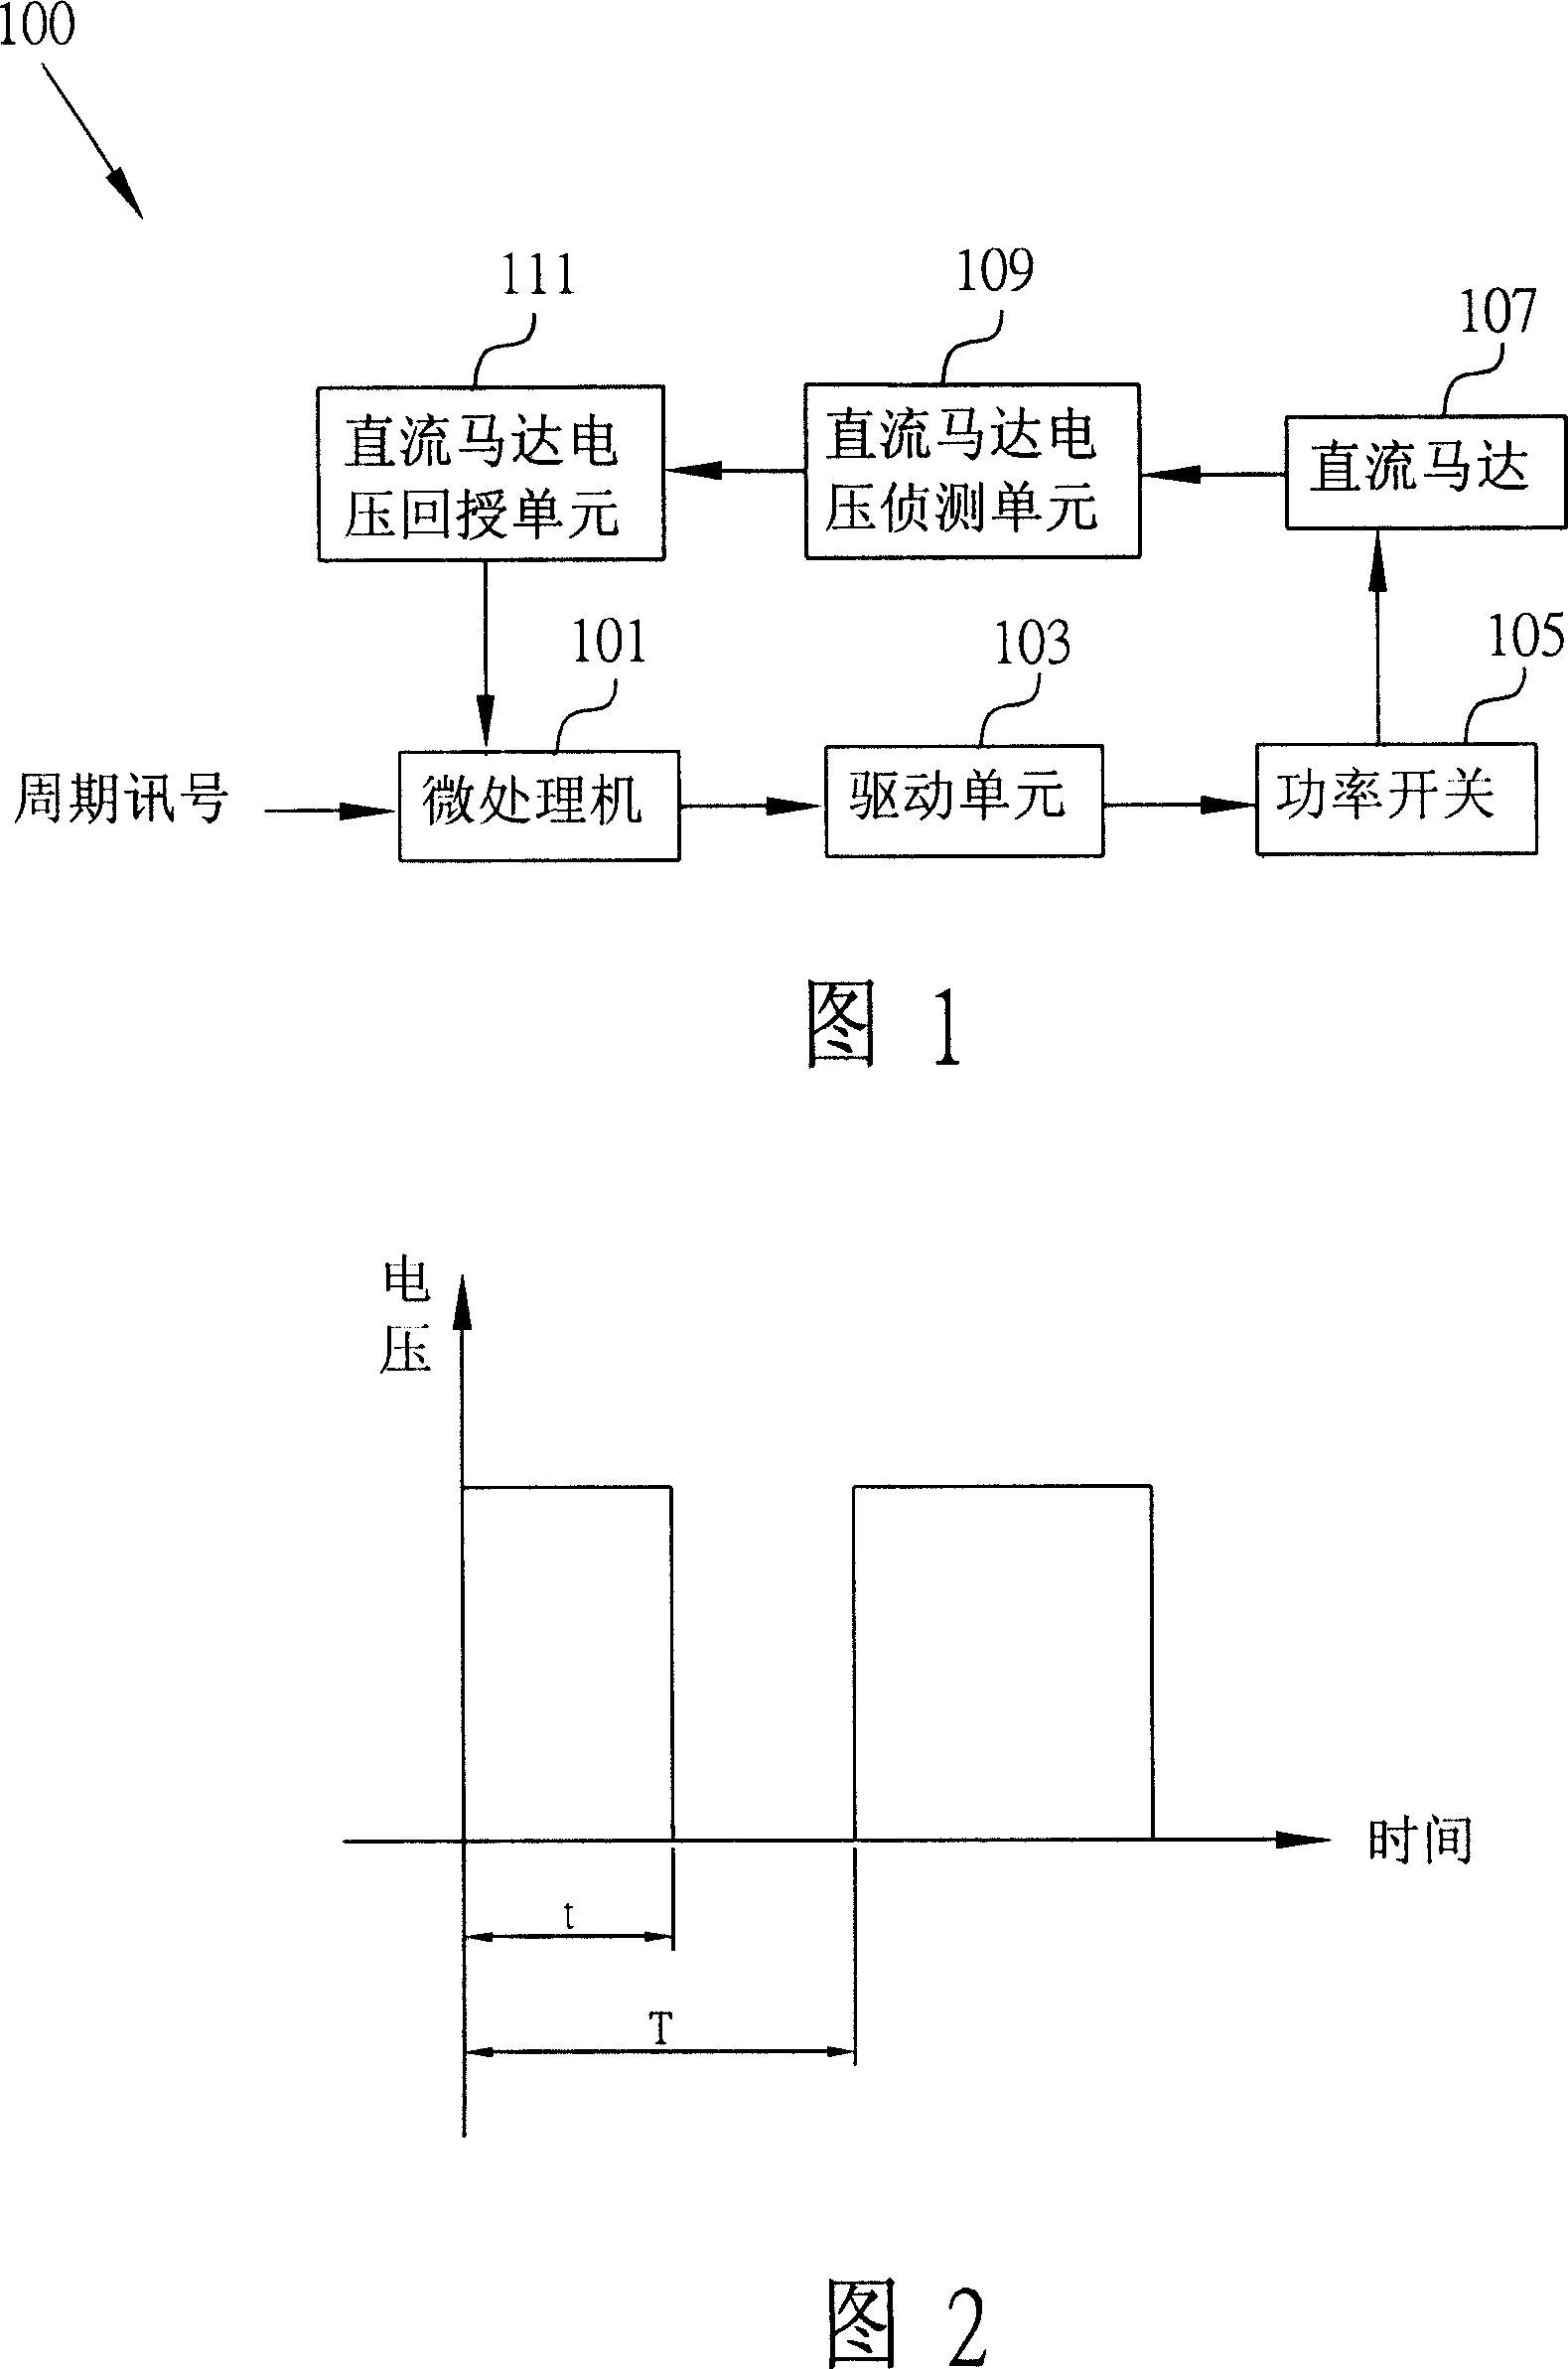 DC motor control method